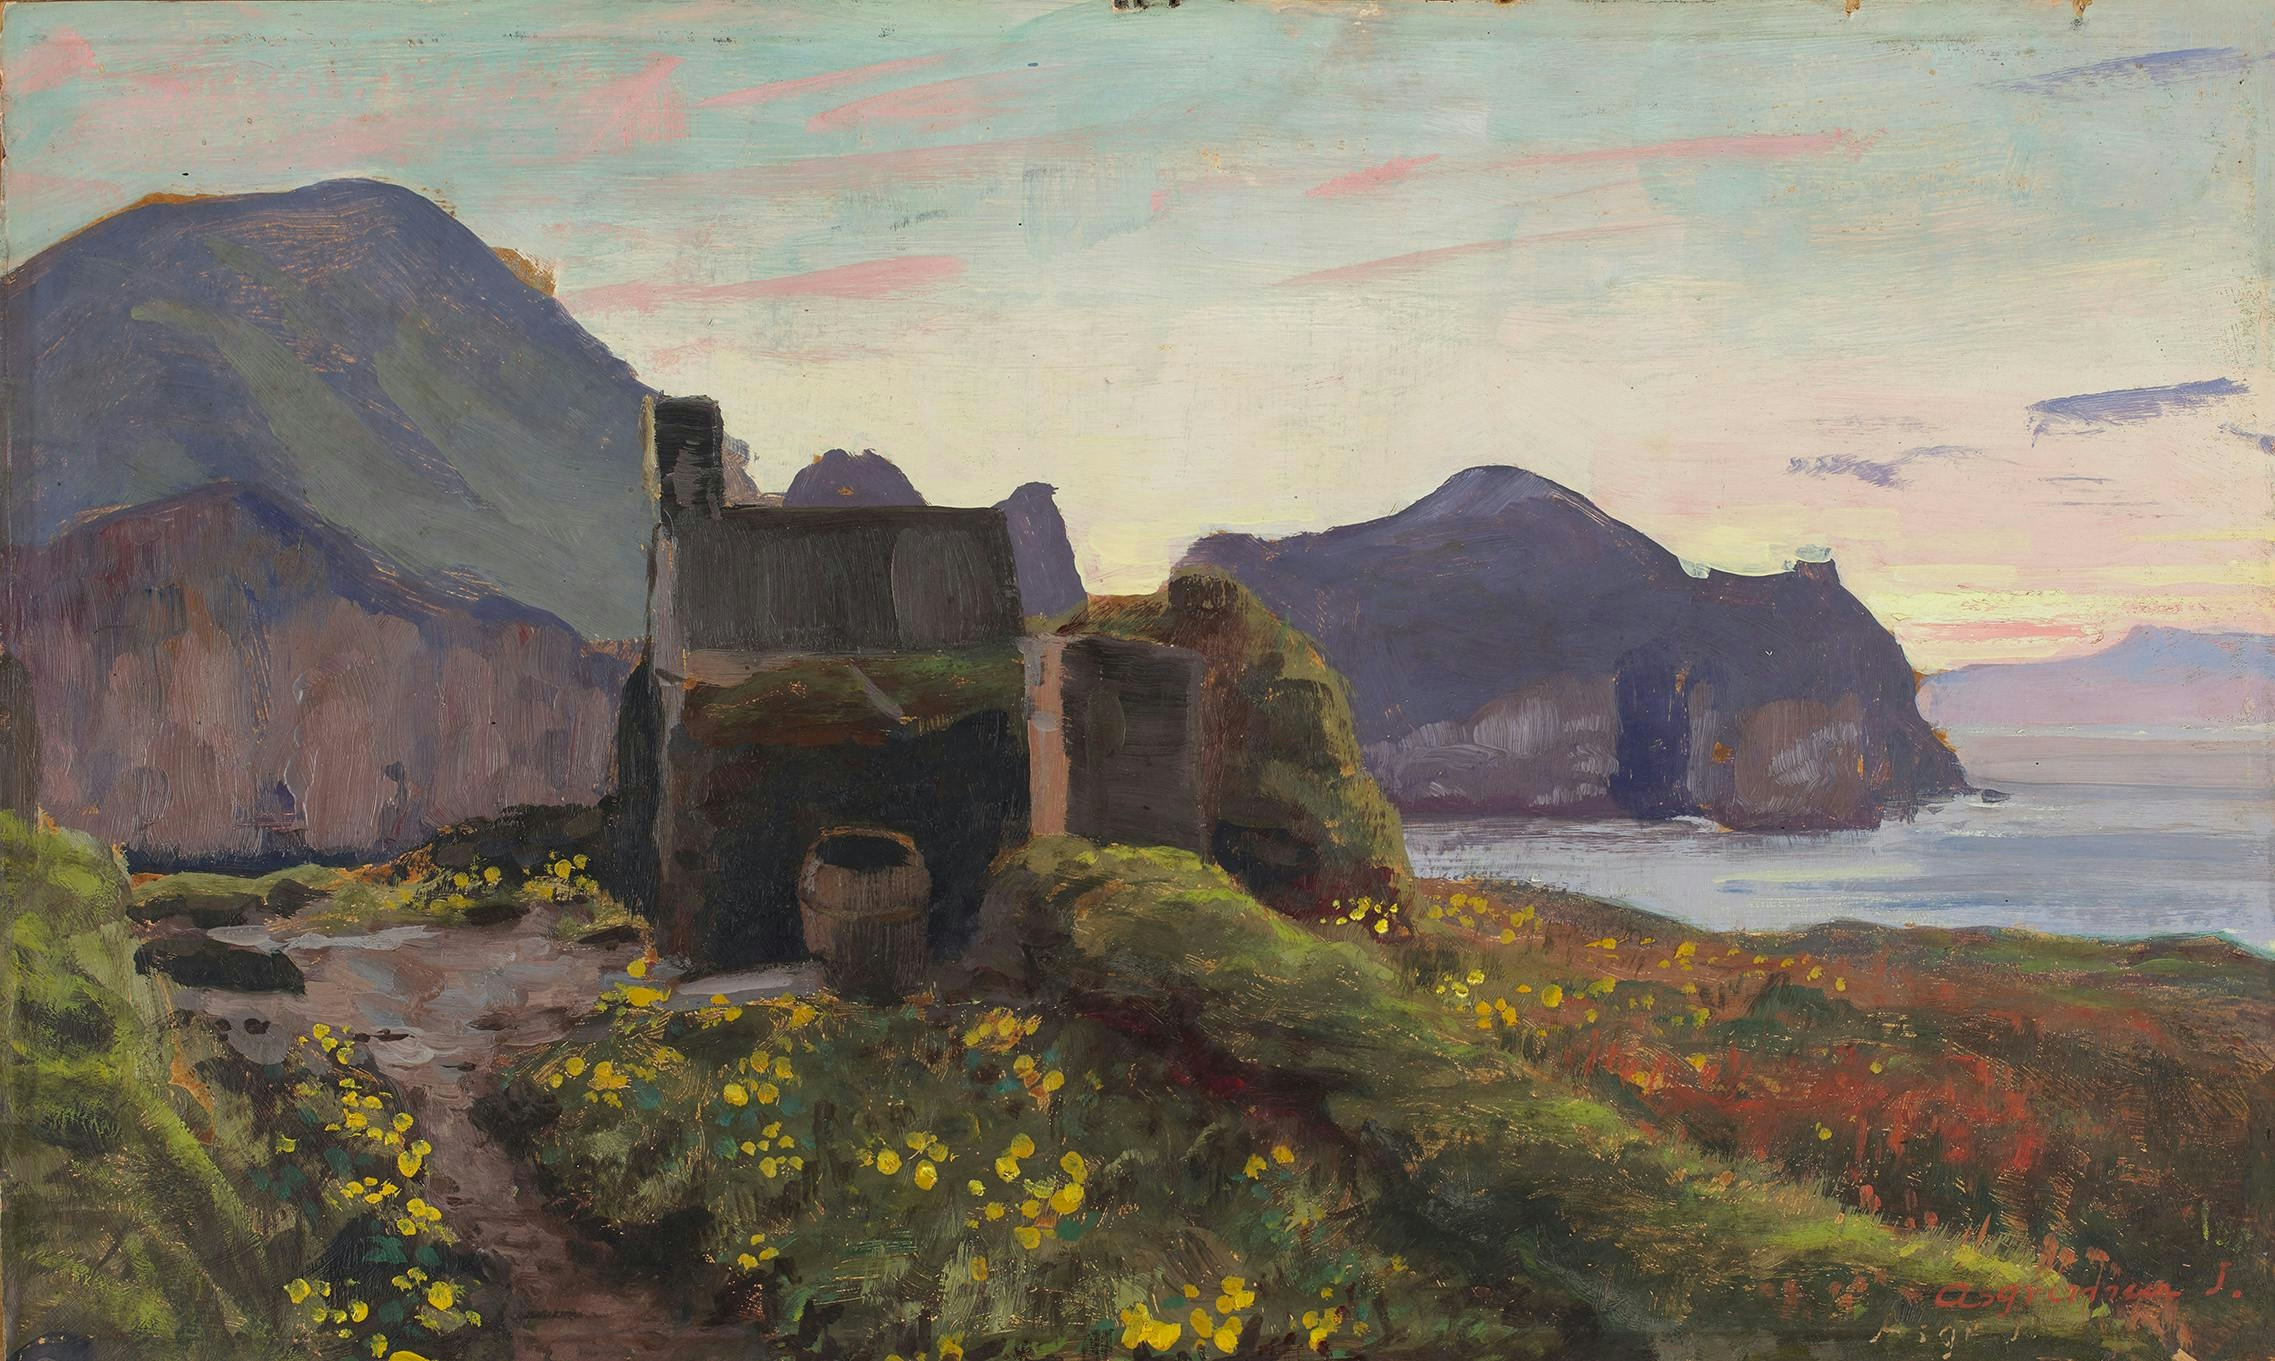 LÍÁJ 2181, Ásgrímur Jónsson, From Vestmannaeyjar